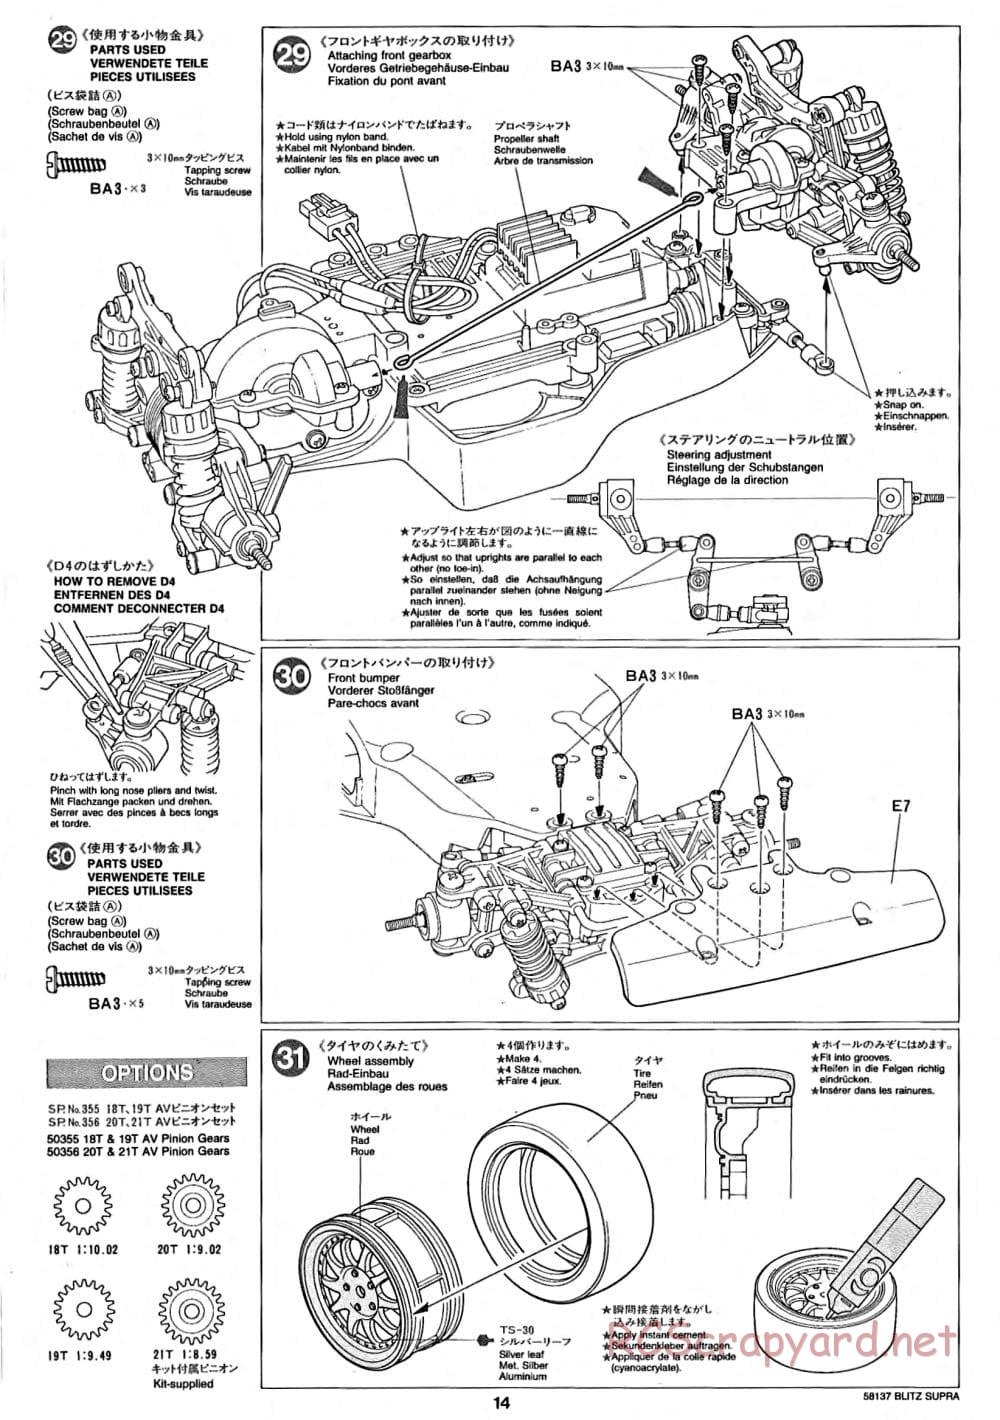 Tamiya - Blitz Toyota Supra Gr.N - TA-02 Chassis - Manual - Page 14